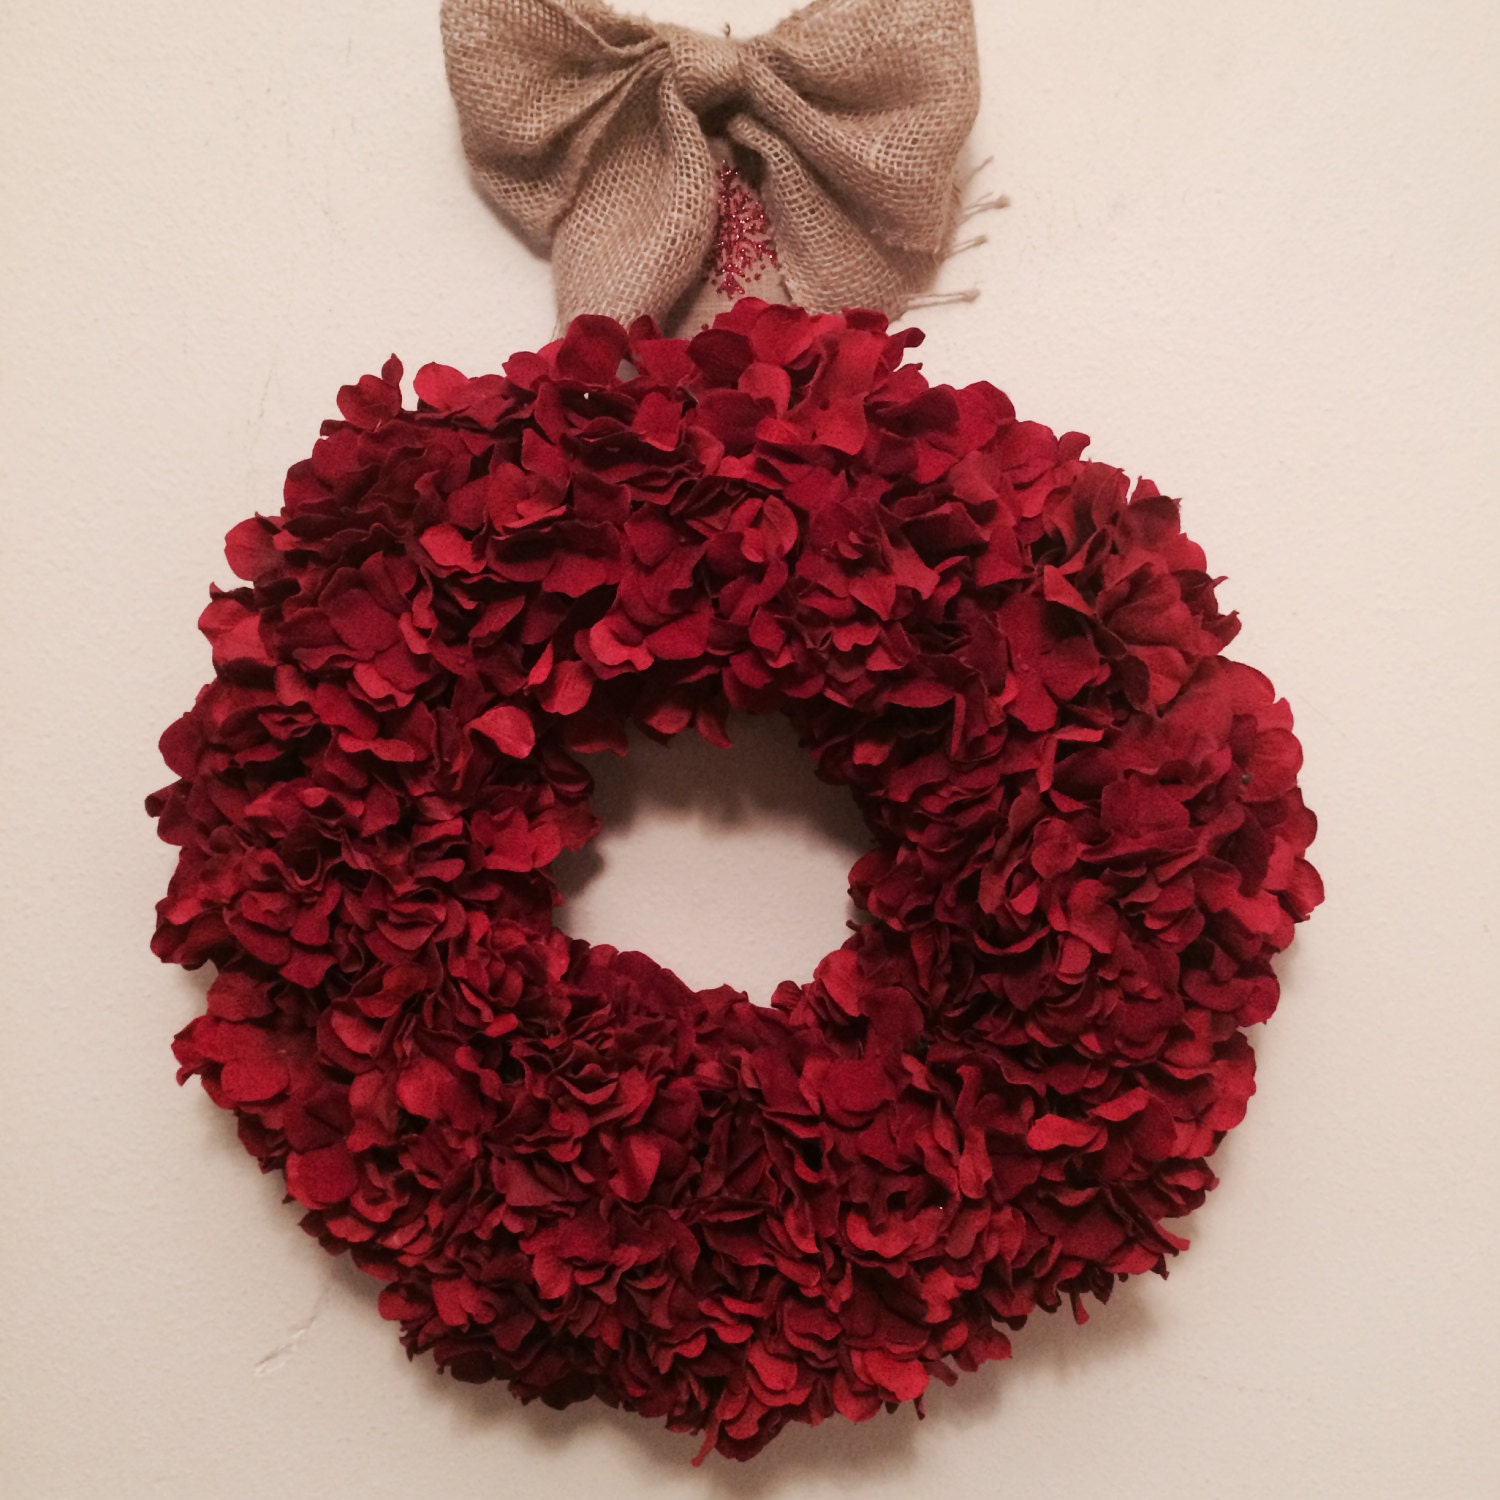 Red hydrangea Wreath 